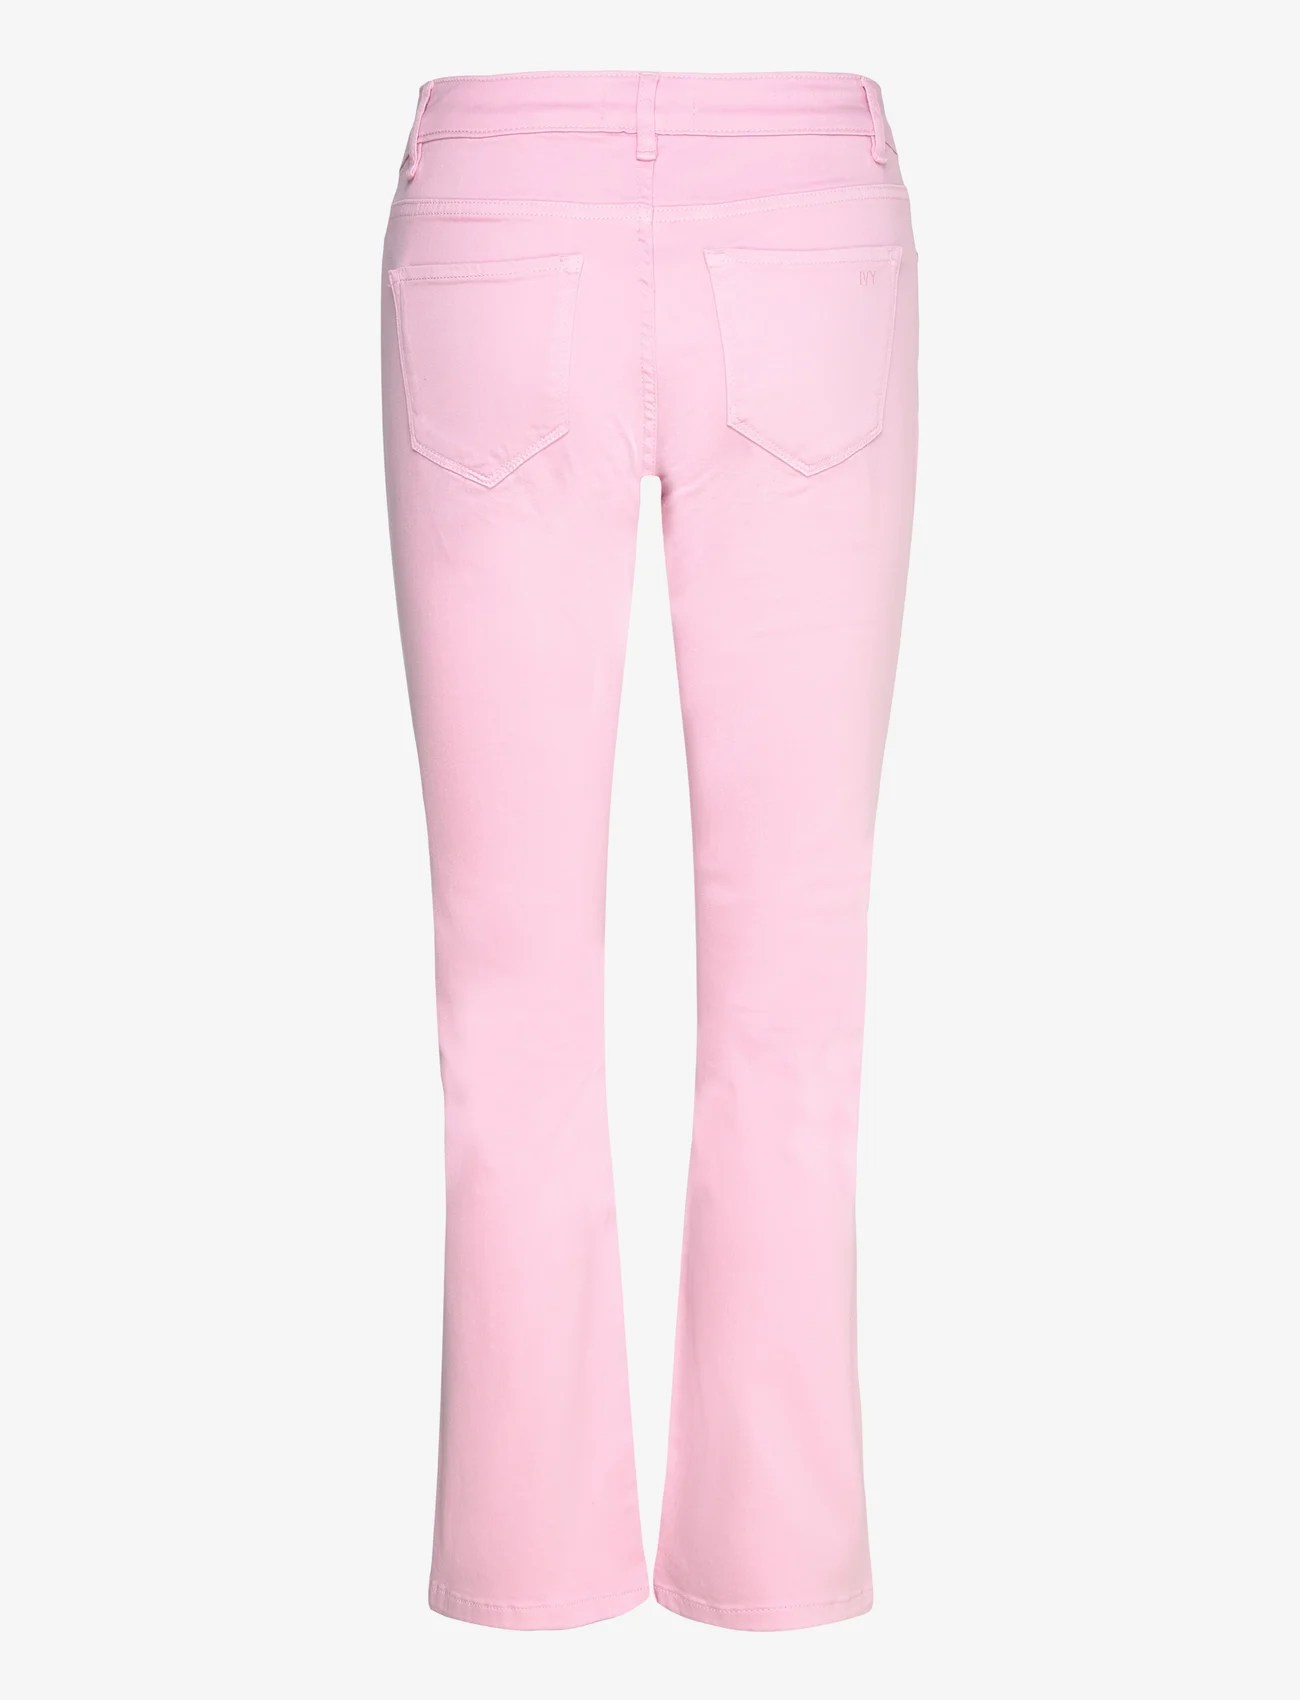 IVY Copenhagen - IVY-Johanna Jeans Color SS24 - flared jeans - dust rose - 1